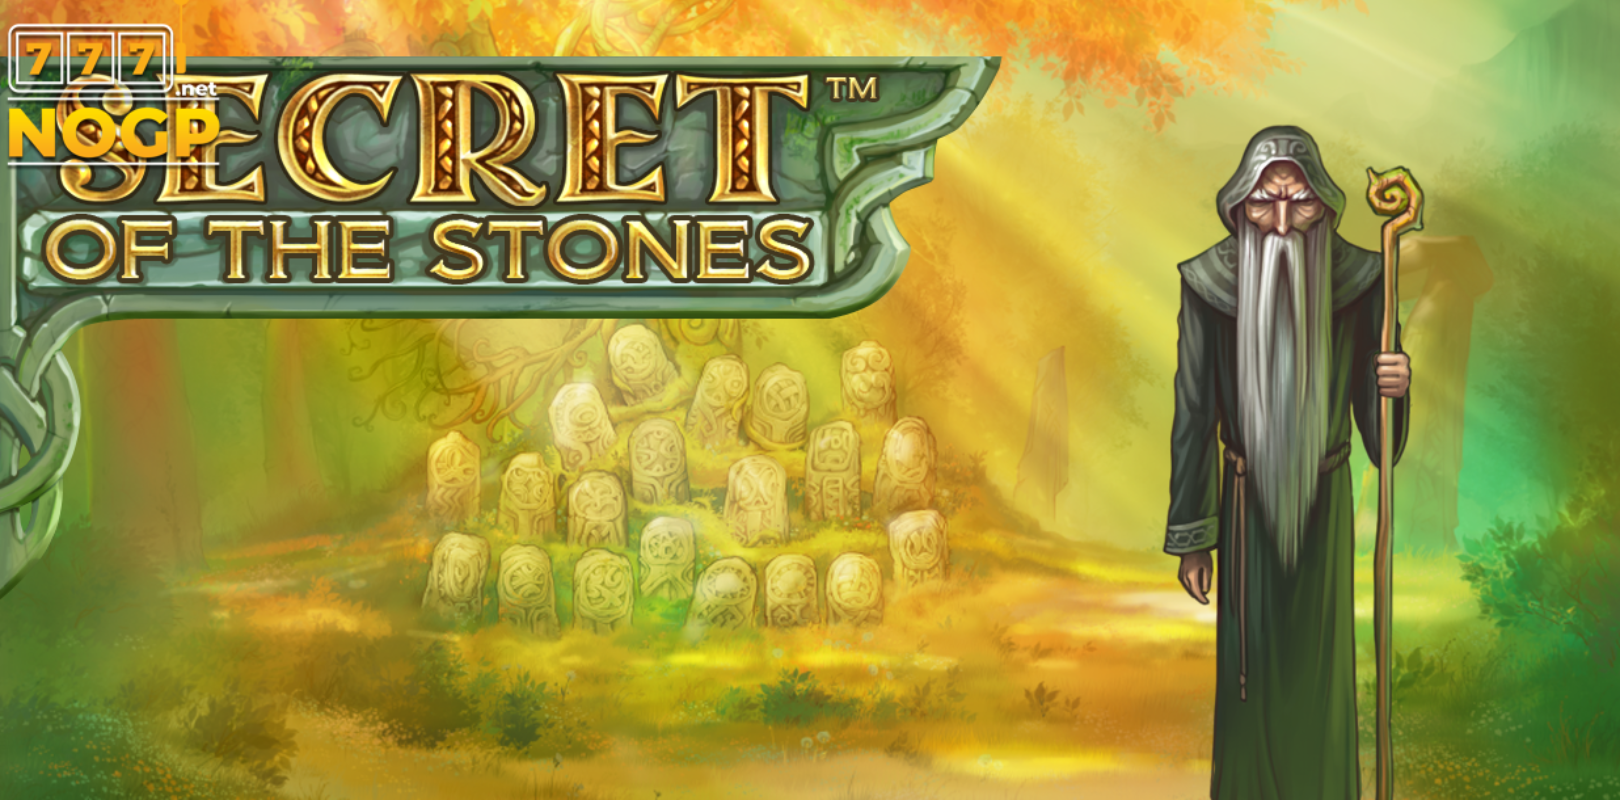 Secret of the stones slot